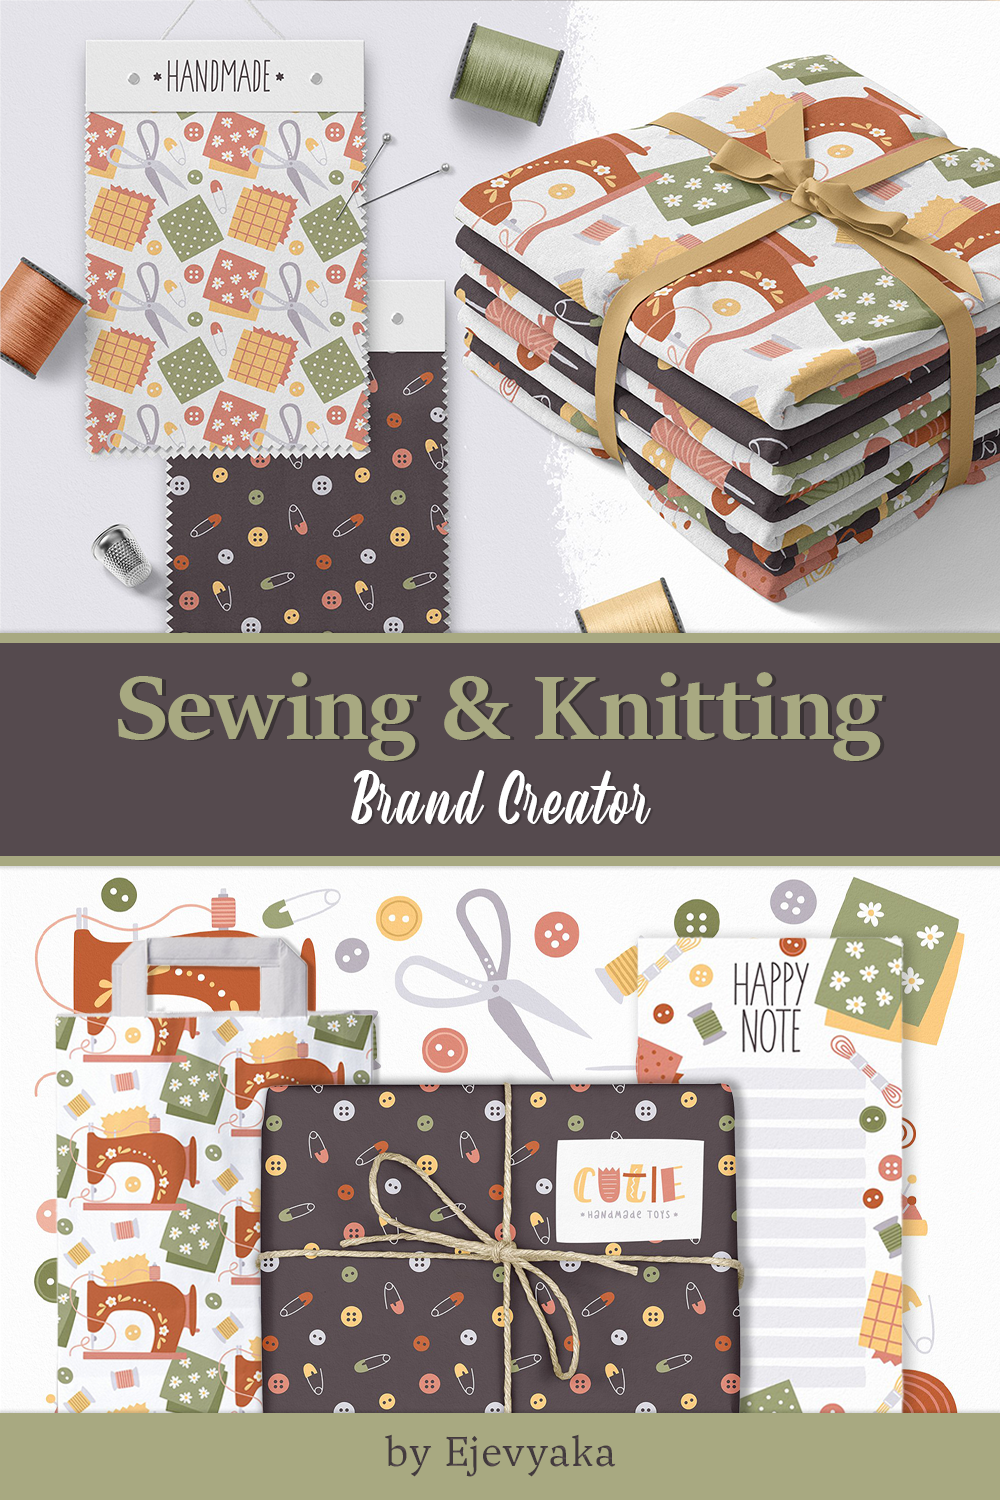 Sewing knitting. brand creator of pinterest.